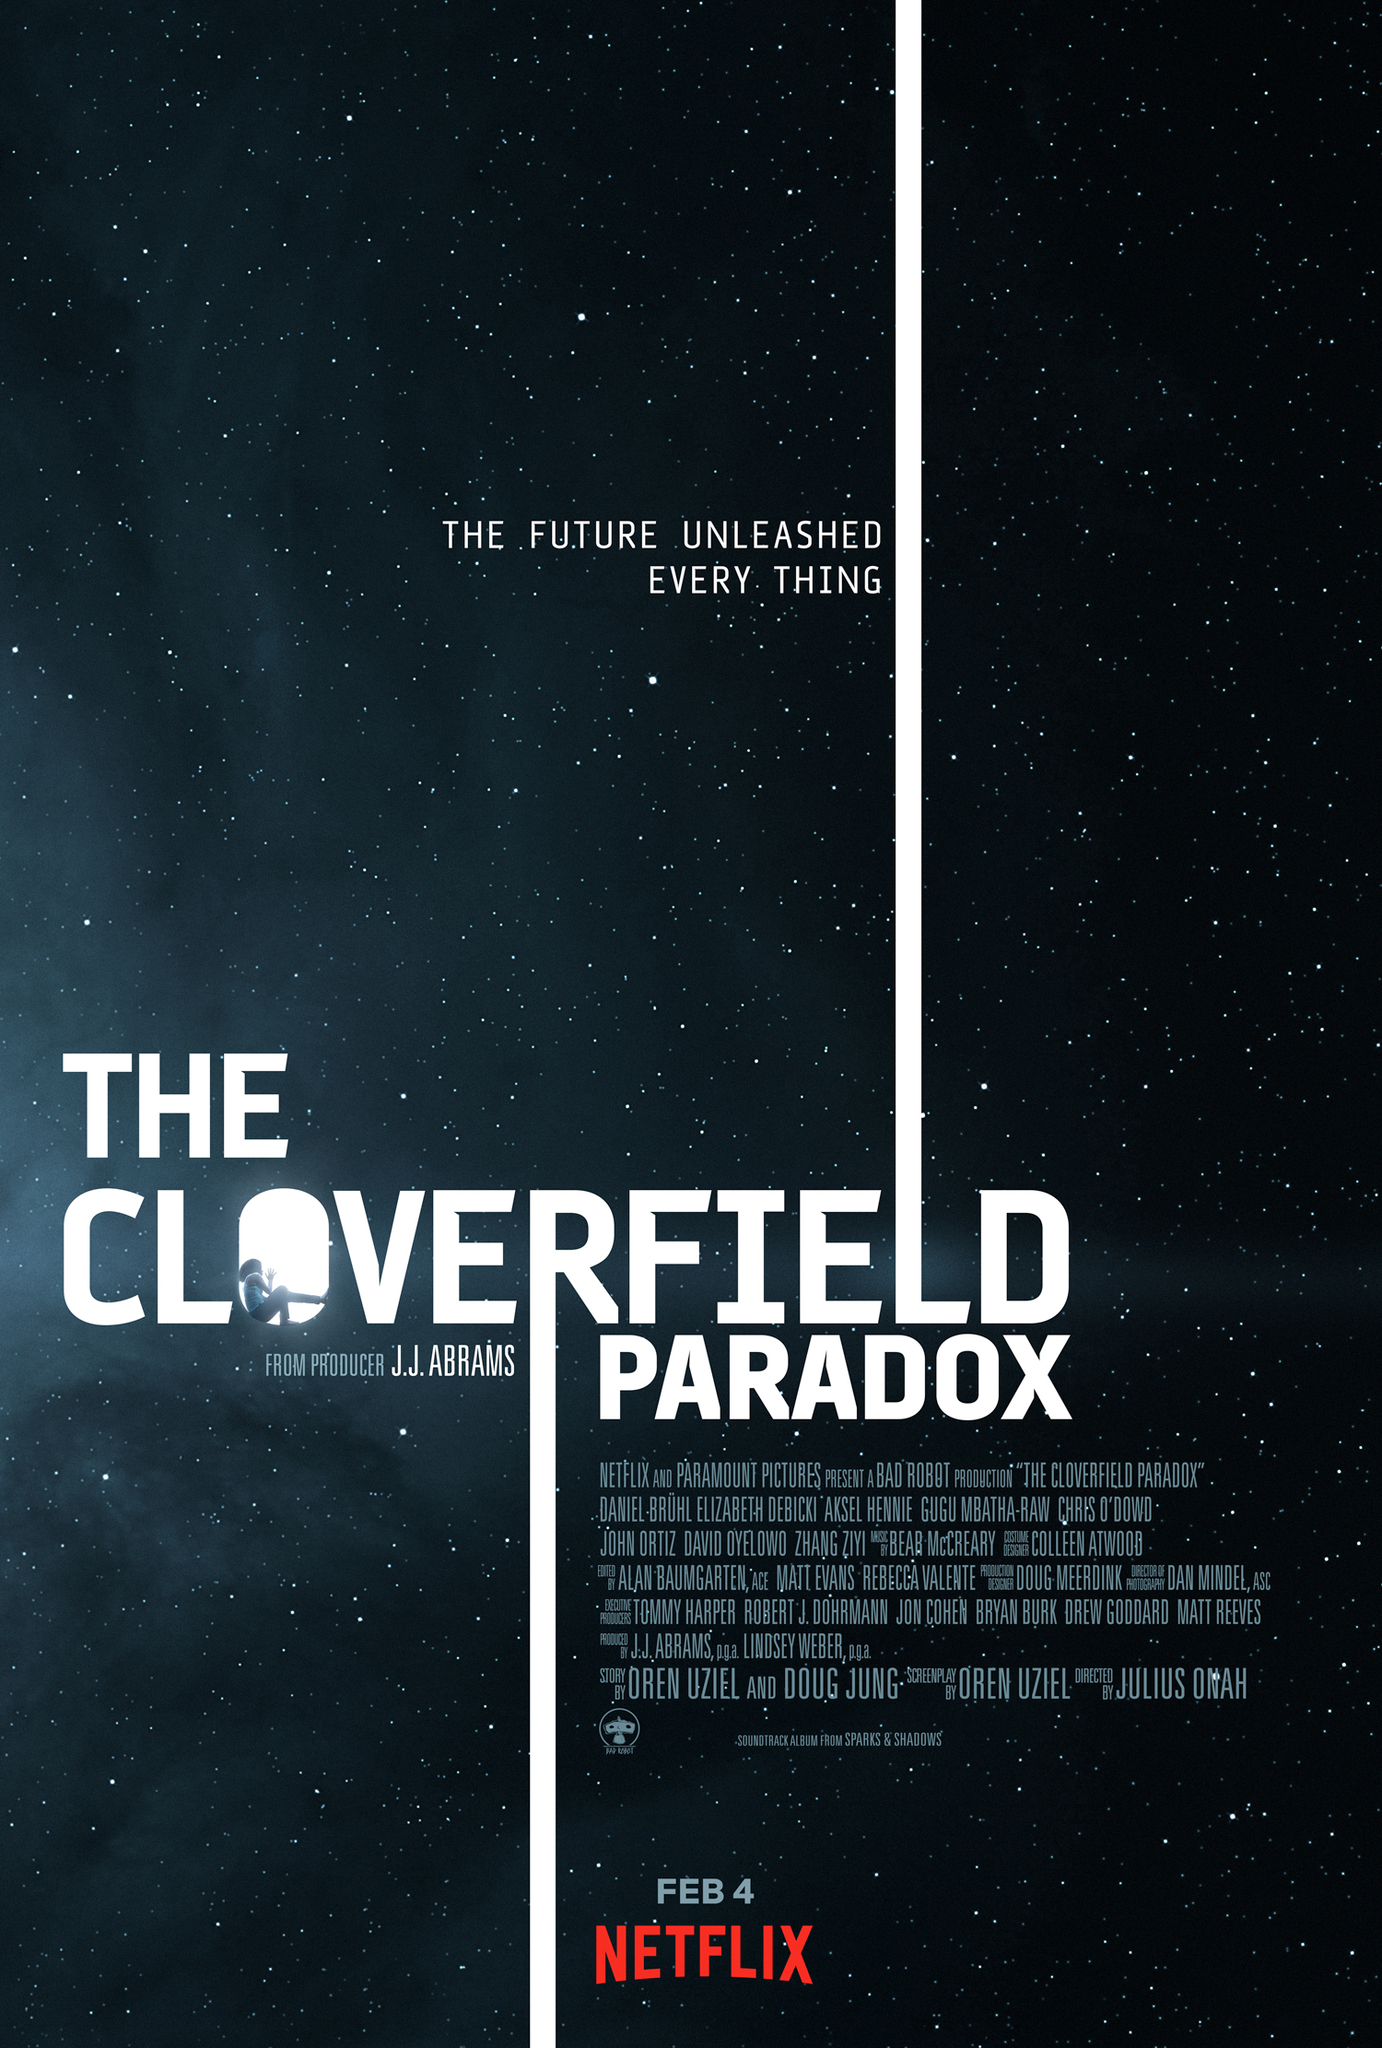 The Cloverfield Paradox sci-fi movies on Netflix